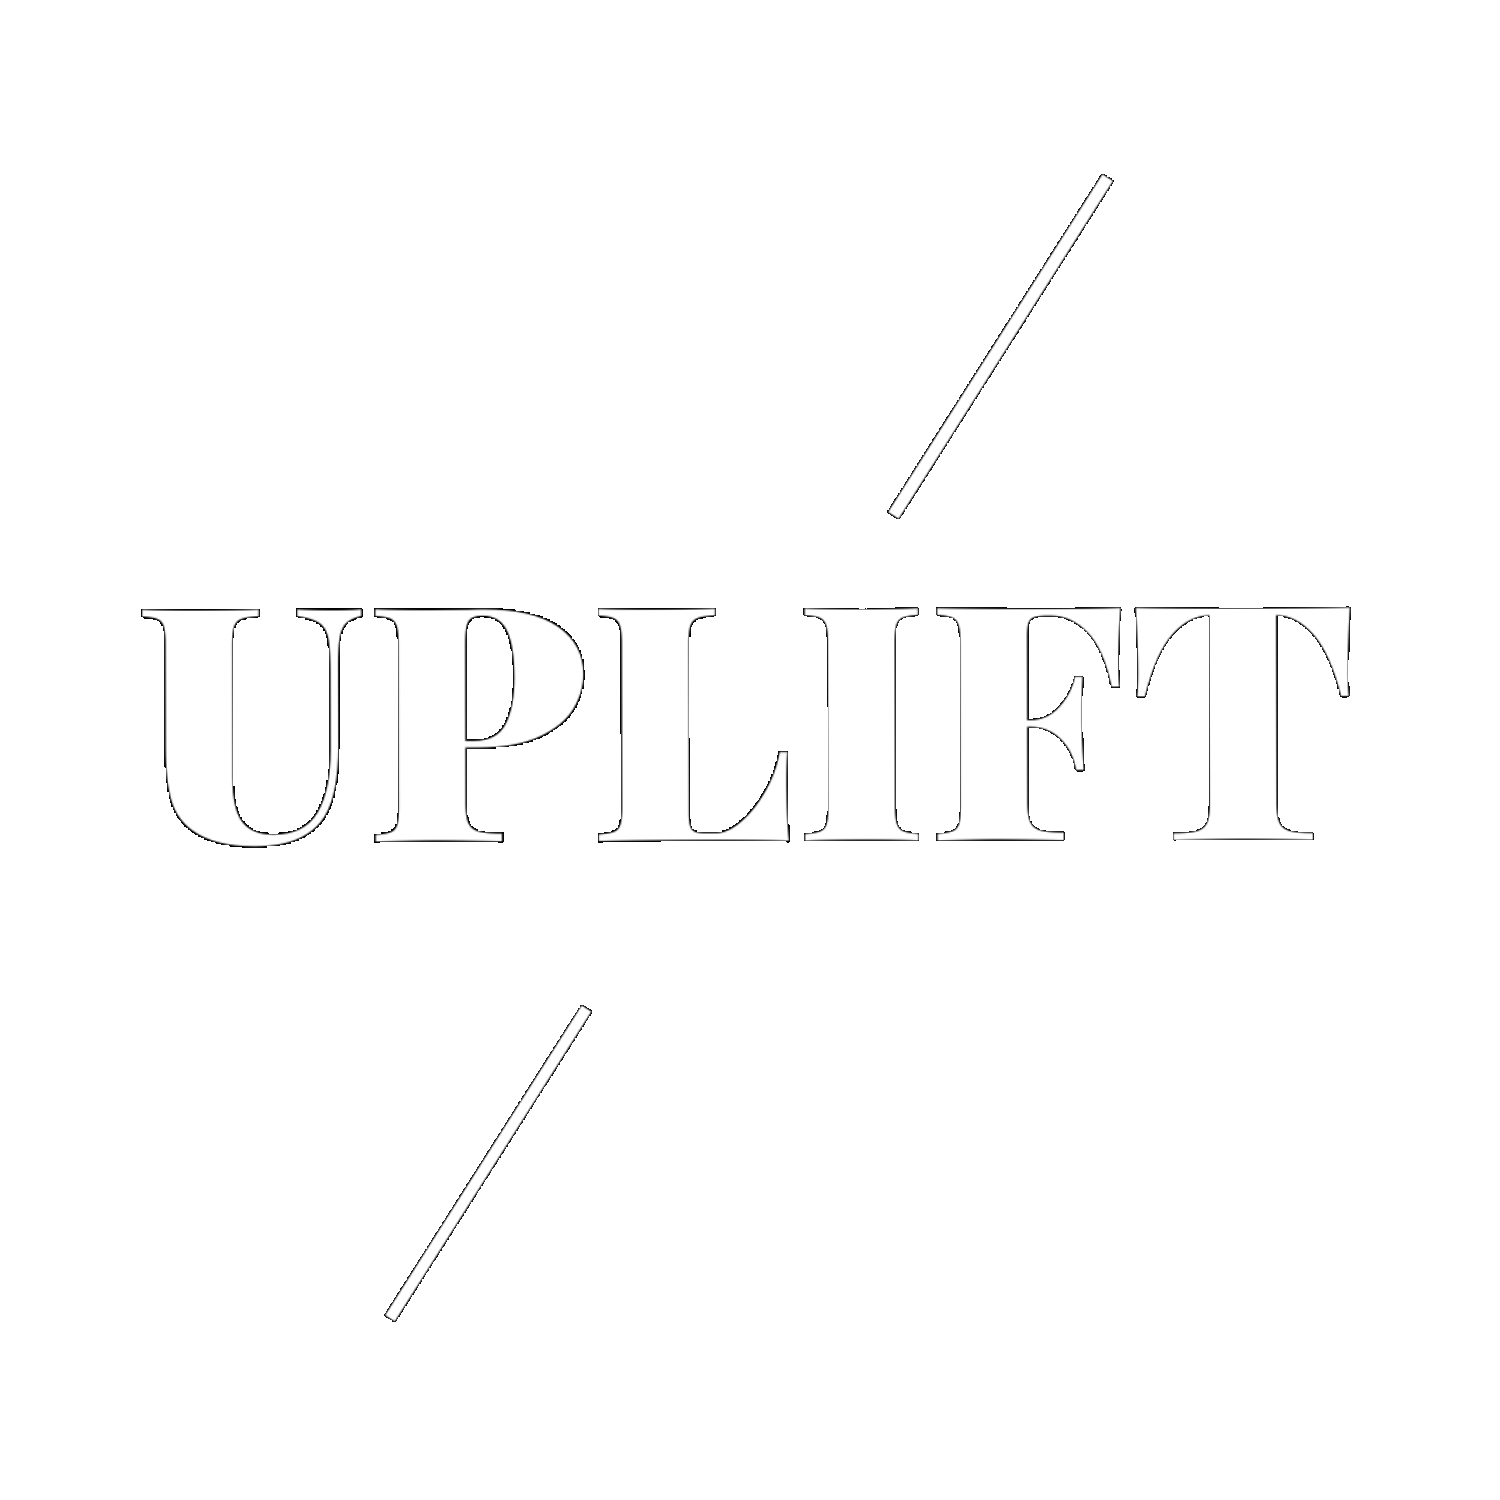 Tattoo Flash Body piercing, tattoo, logo, monochrome png